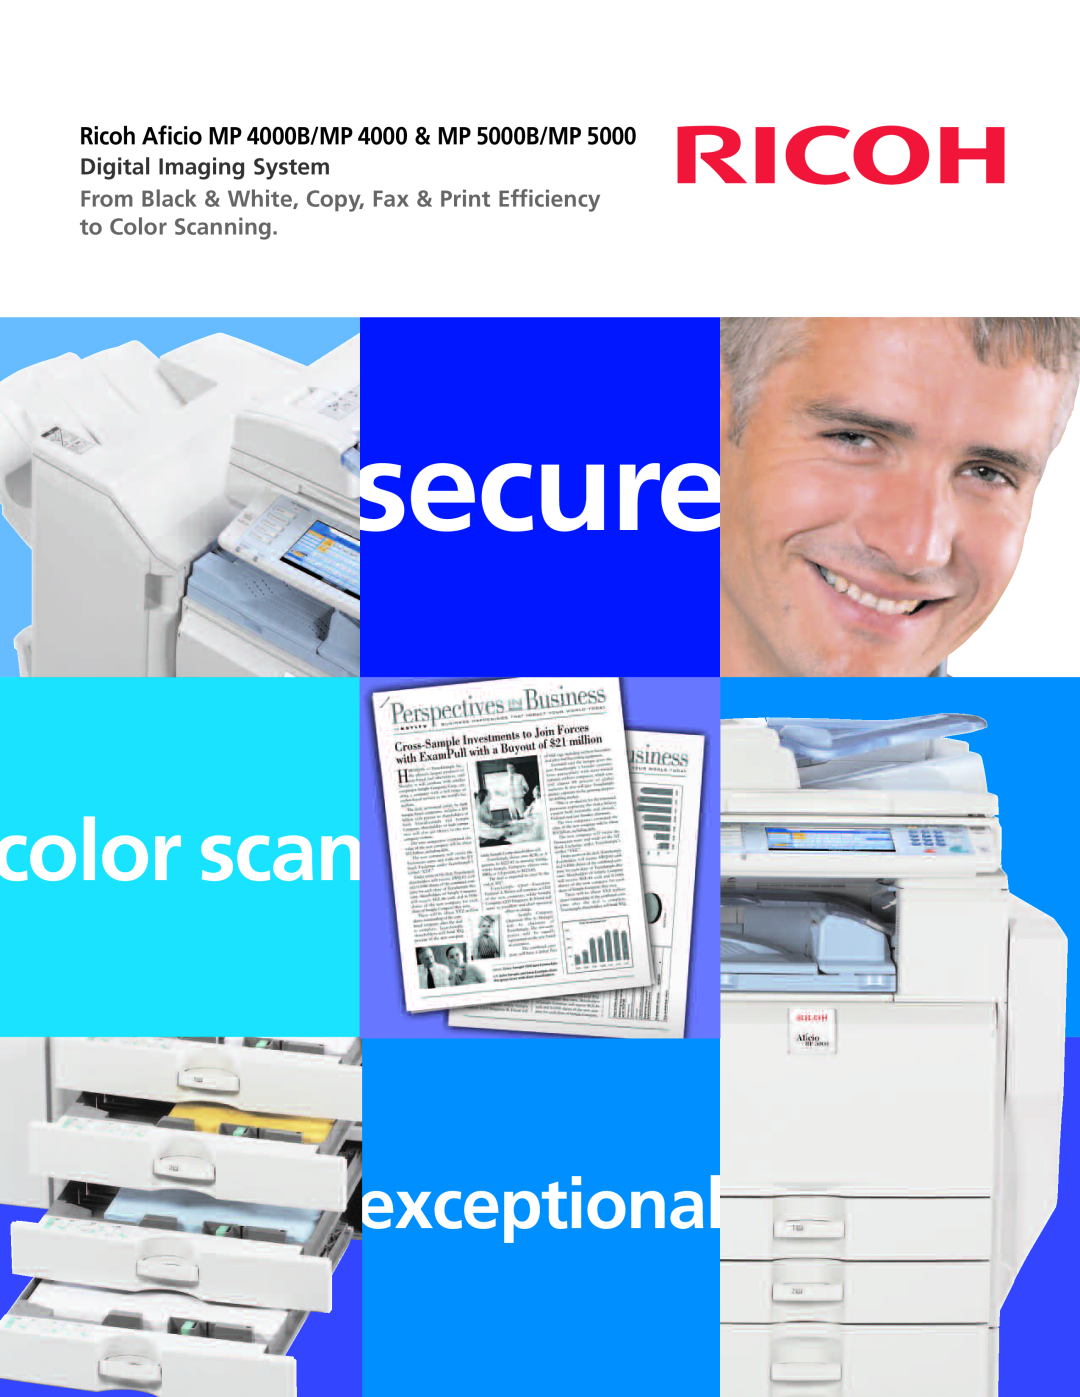 Ricoh manual secure, color scan, exceptional, Ricoh Aficio MP 4000B/MP 4000 & MP 5000B/MP, Digital Imaging System 